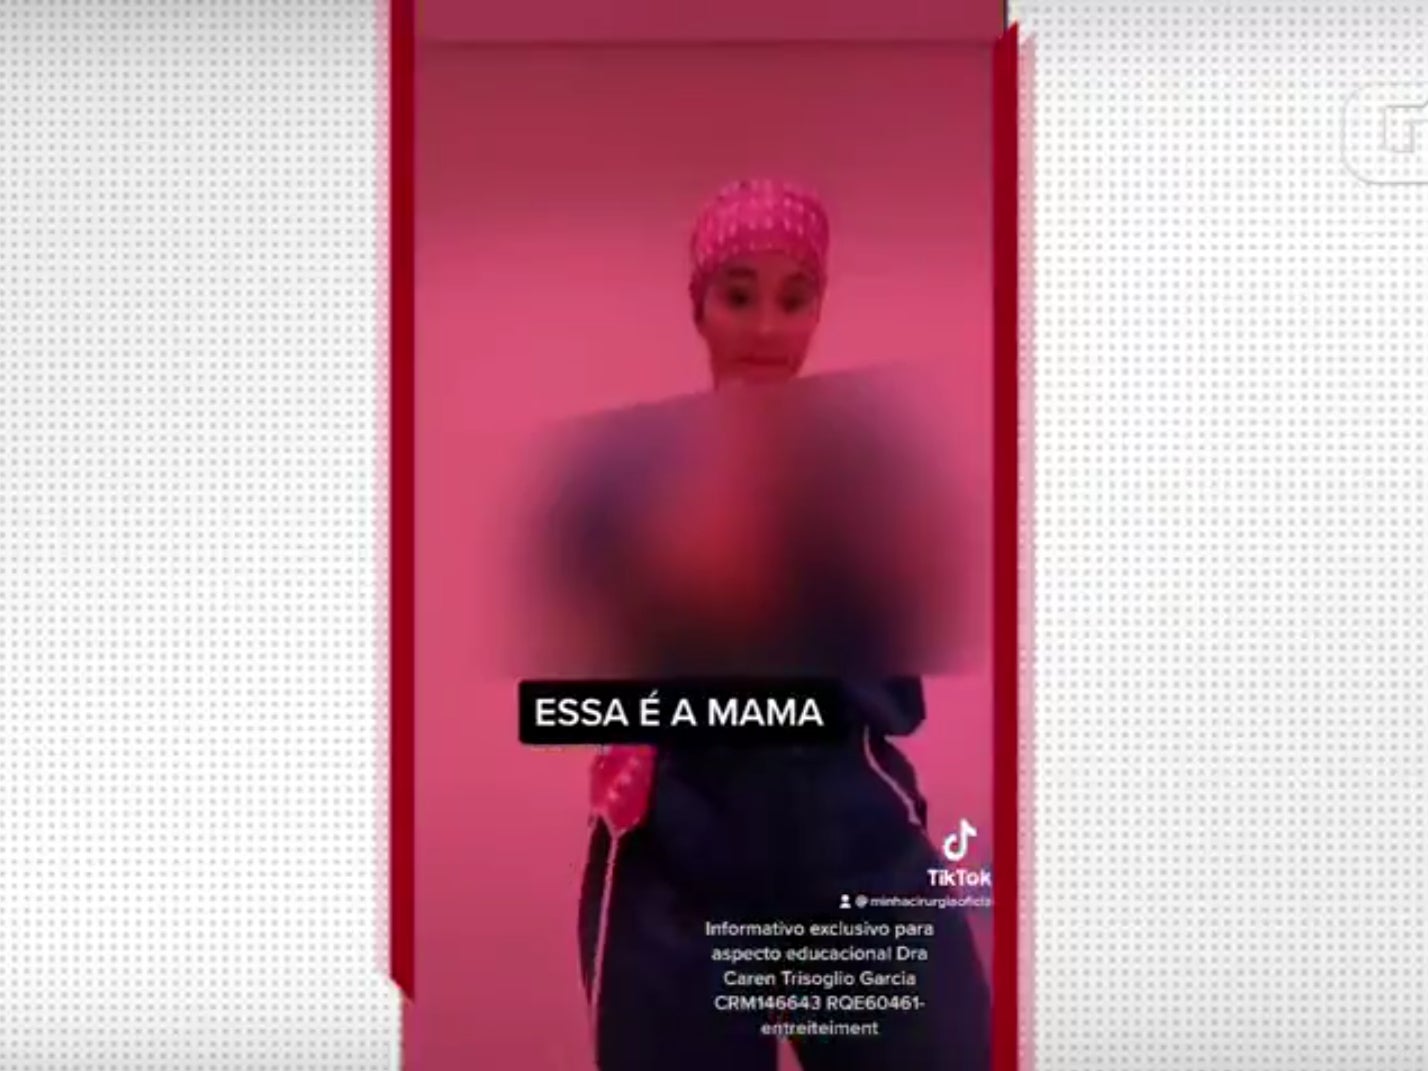 A video reportedly showing Brazilian plastic surgeon Caren Trisoglio Garcia dancing with human flesh